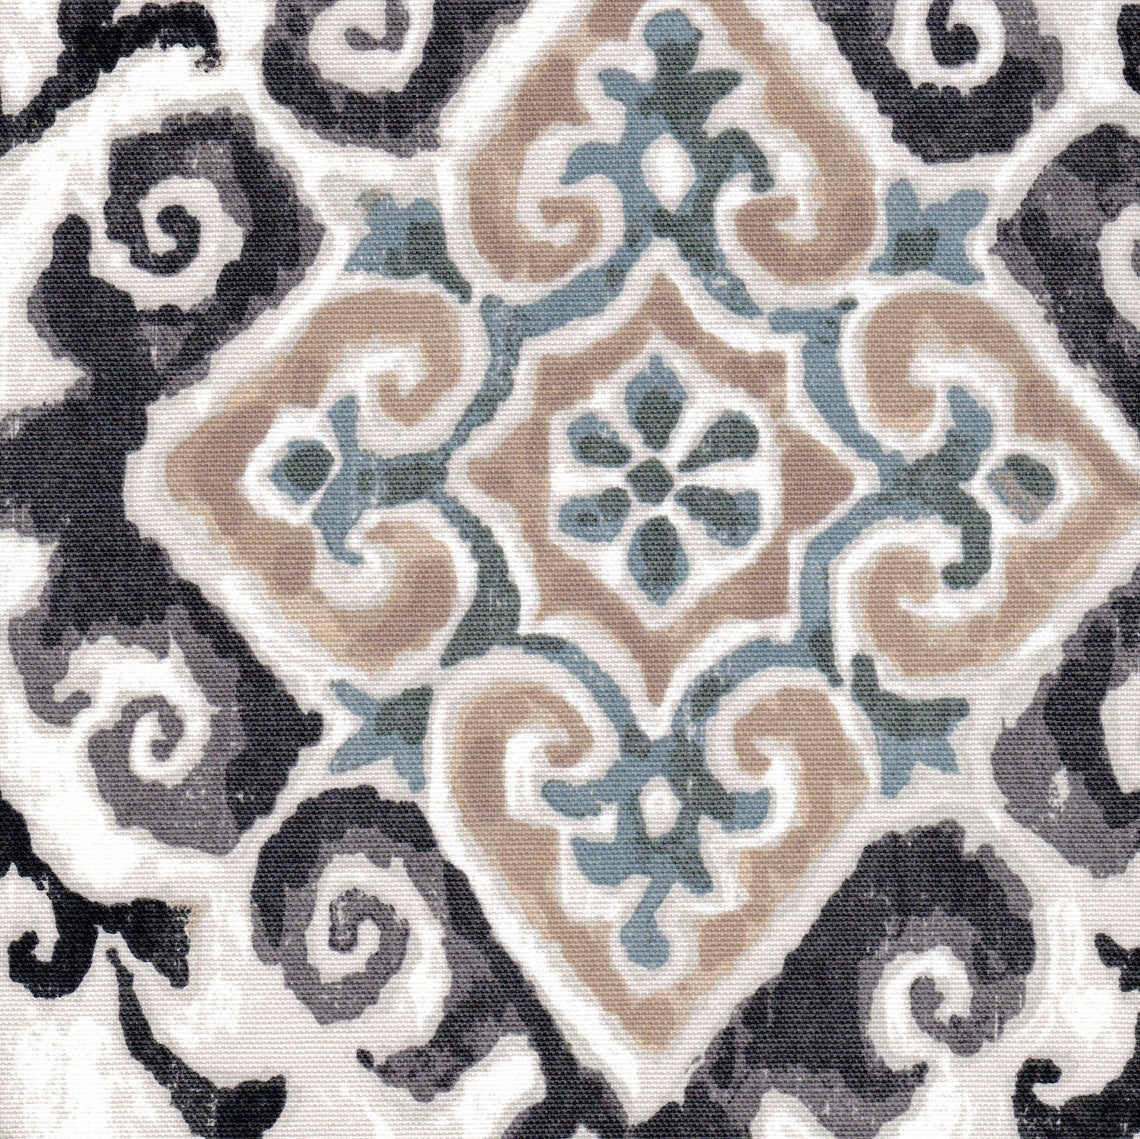 tab top curtain panels pair in feabhra slate gray diamond medallion - blue, tan, large scale